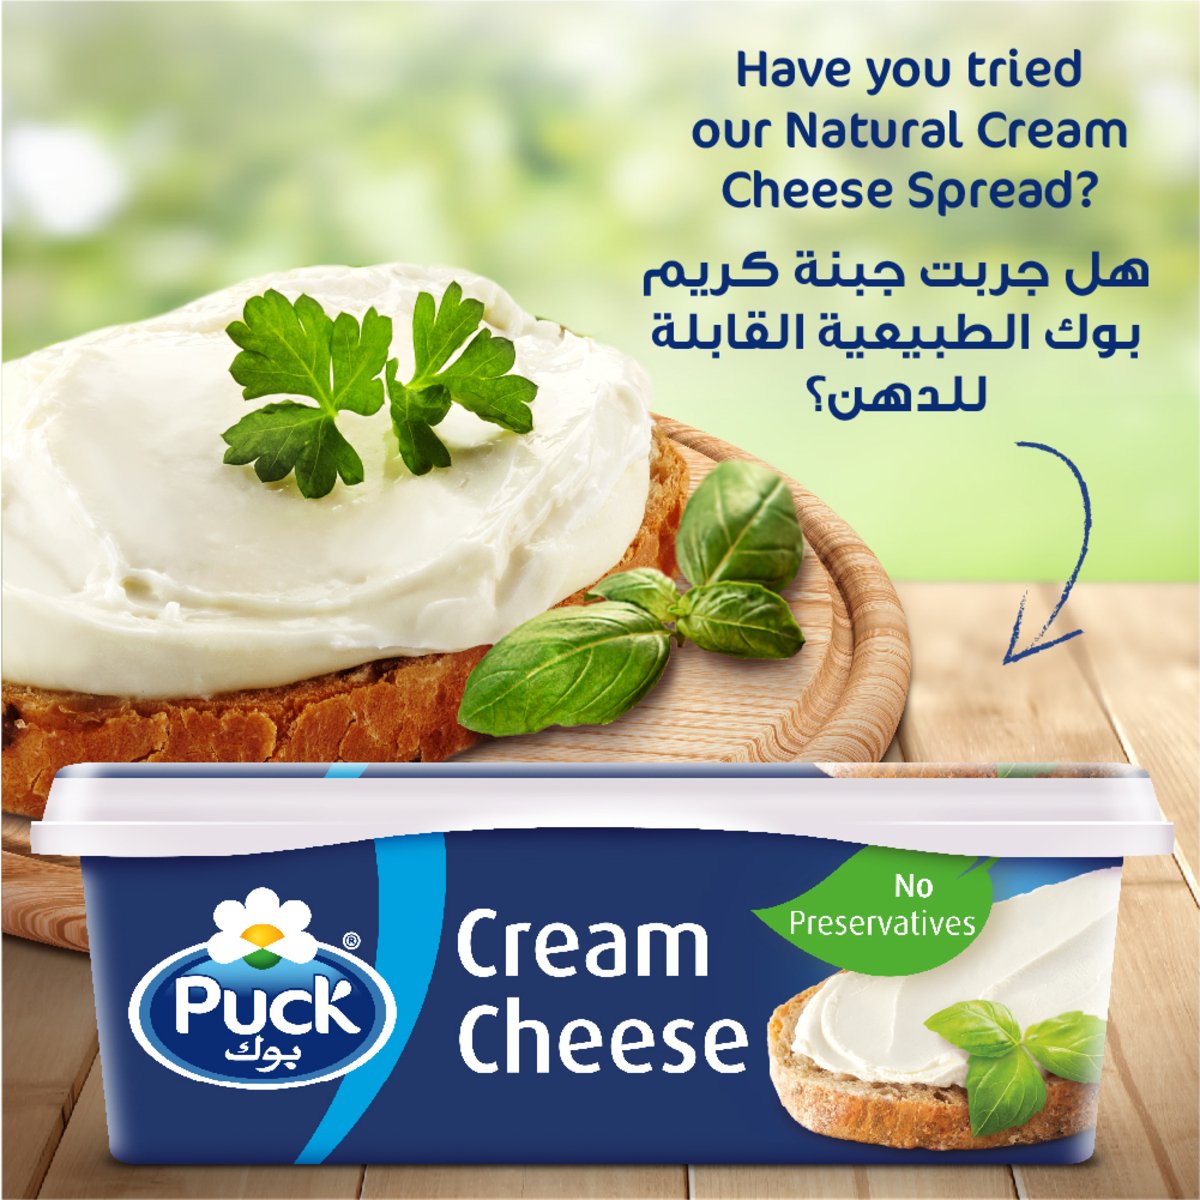 Puck Cream Cheese Spread 3 x 240 g